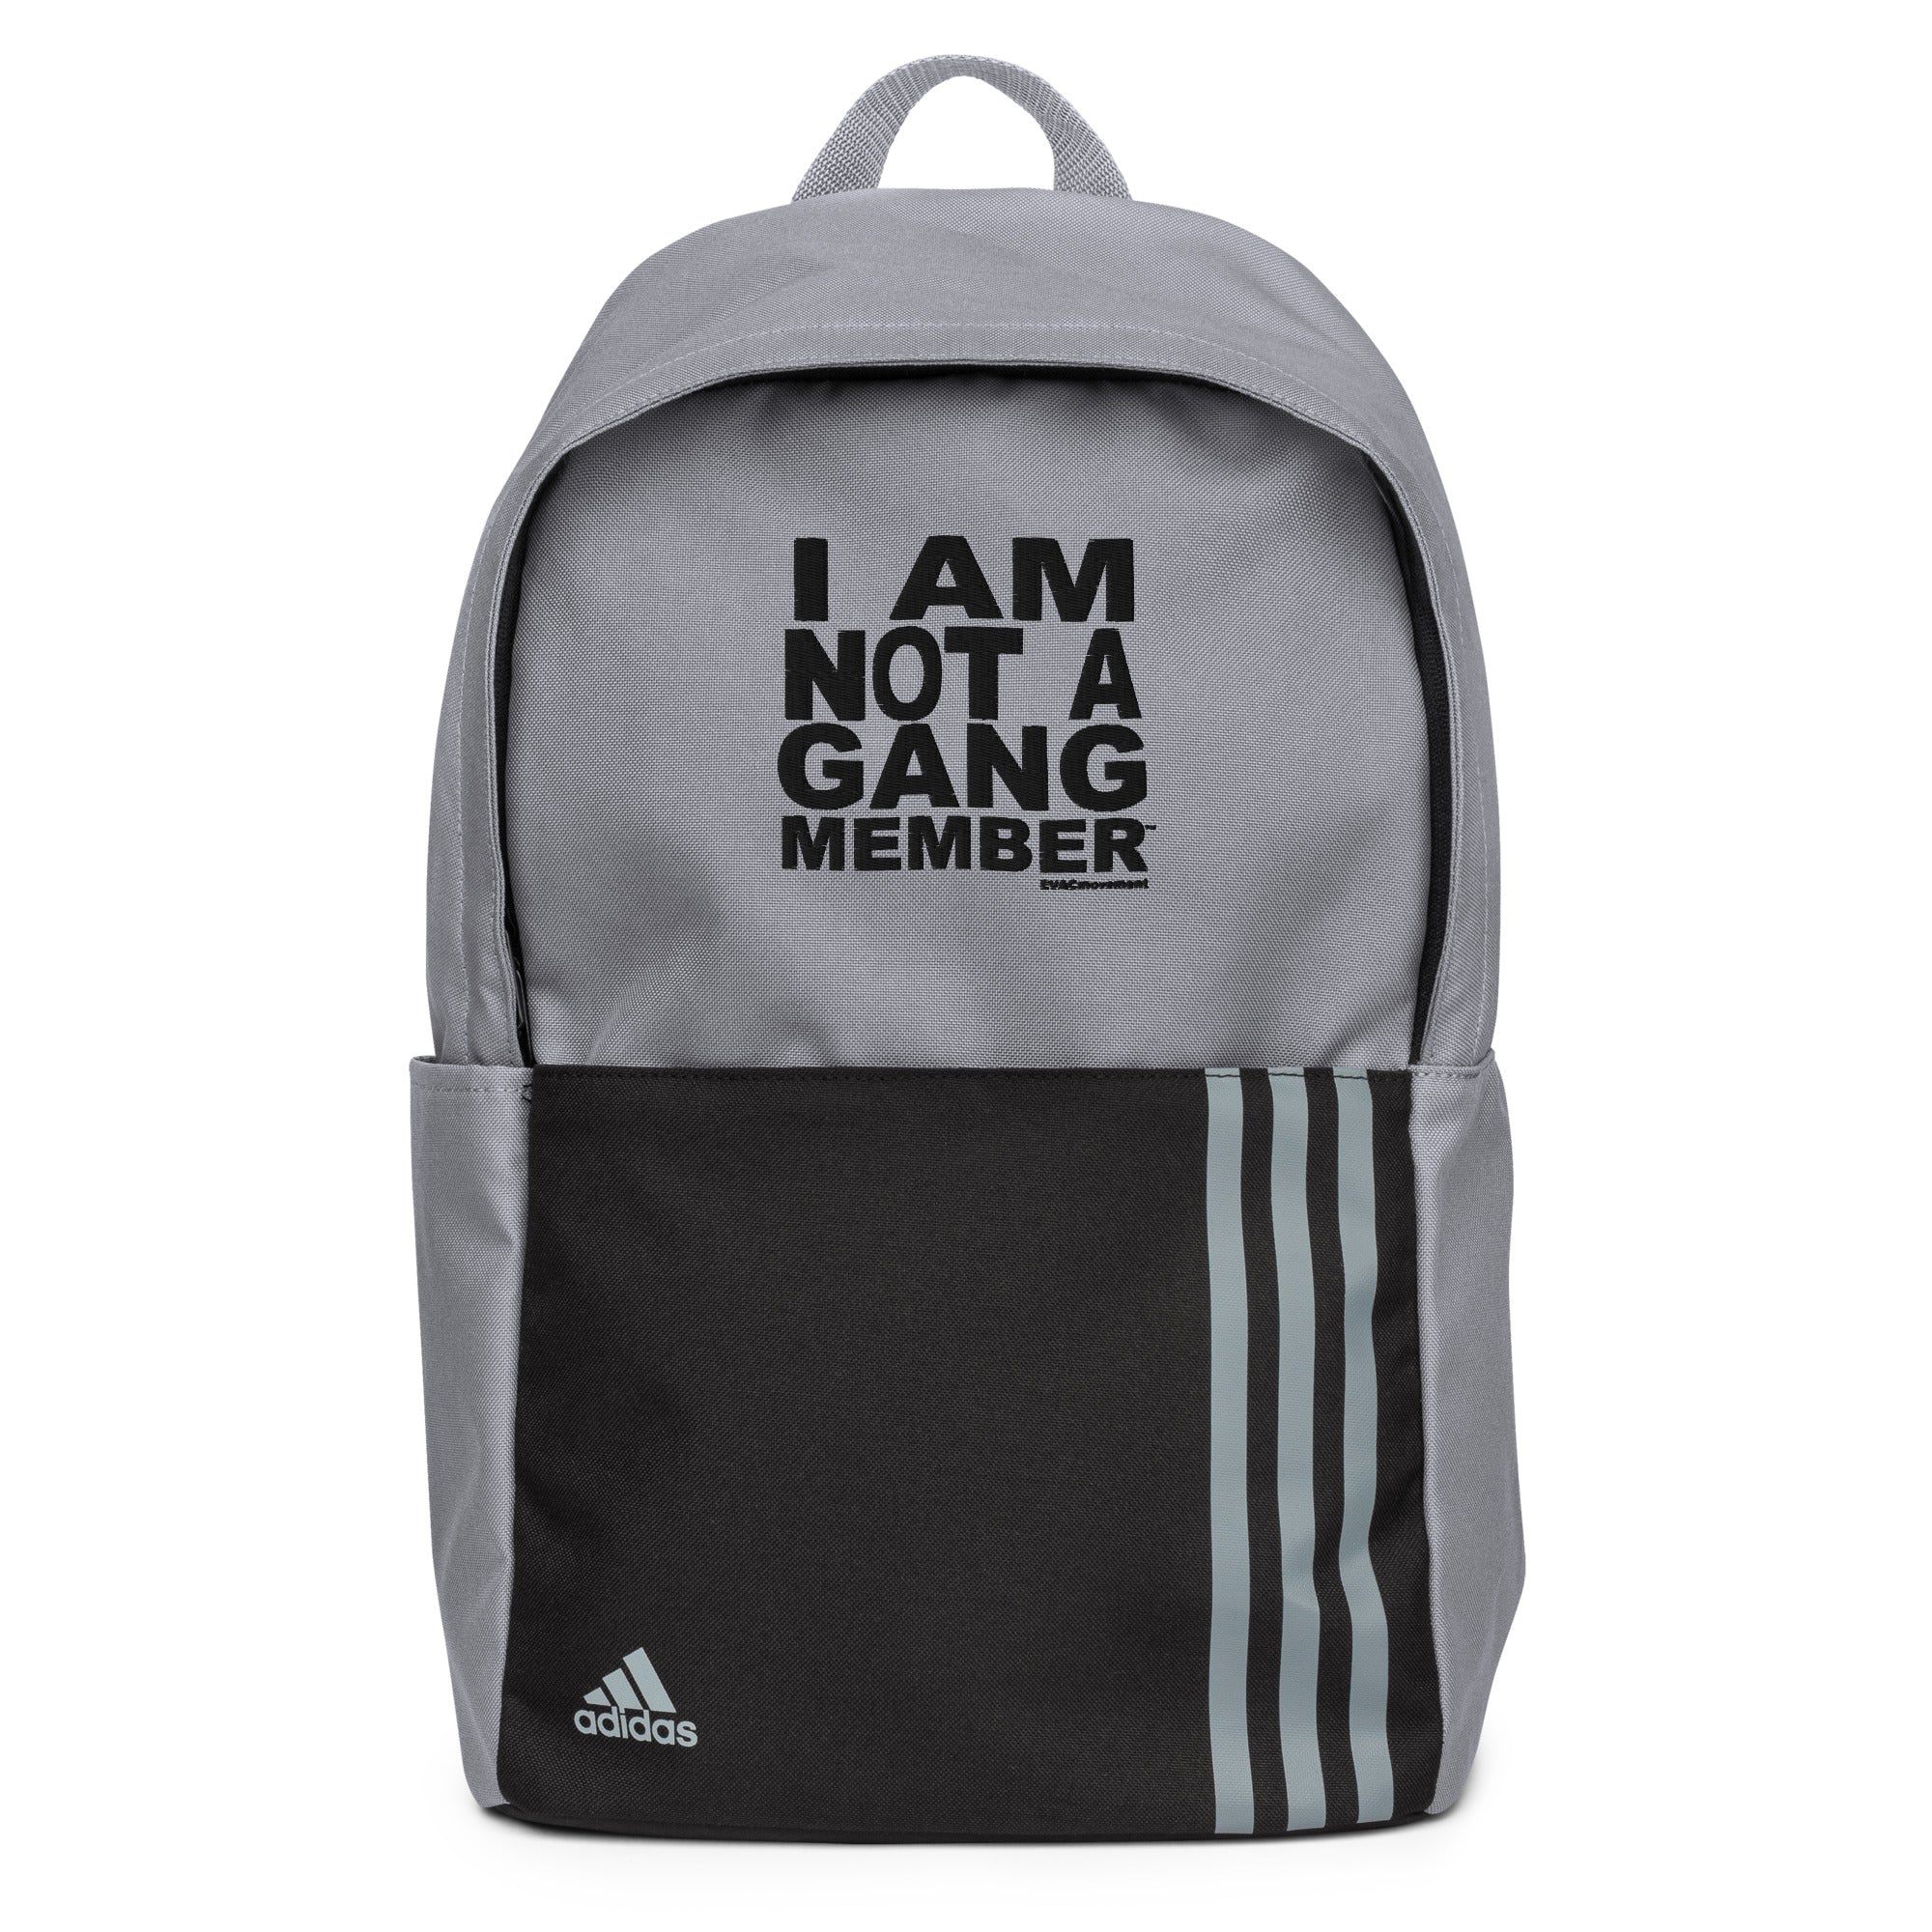 "I Am Not a Gang Member" Backpack